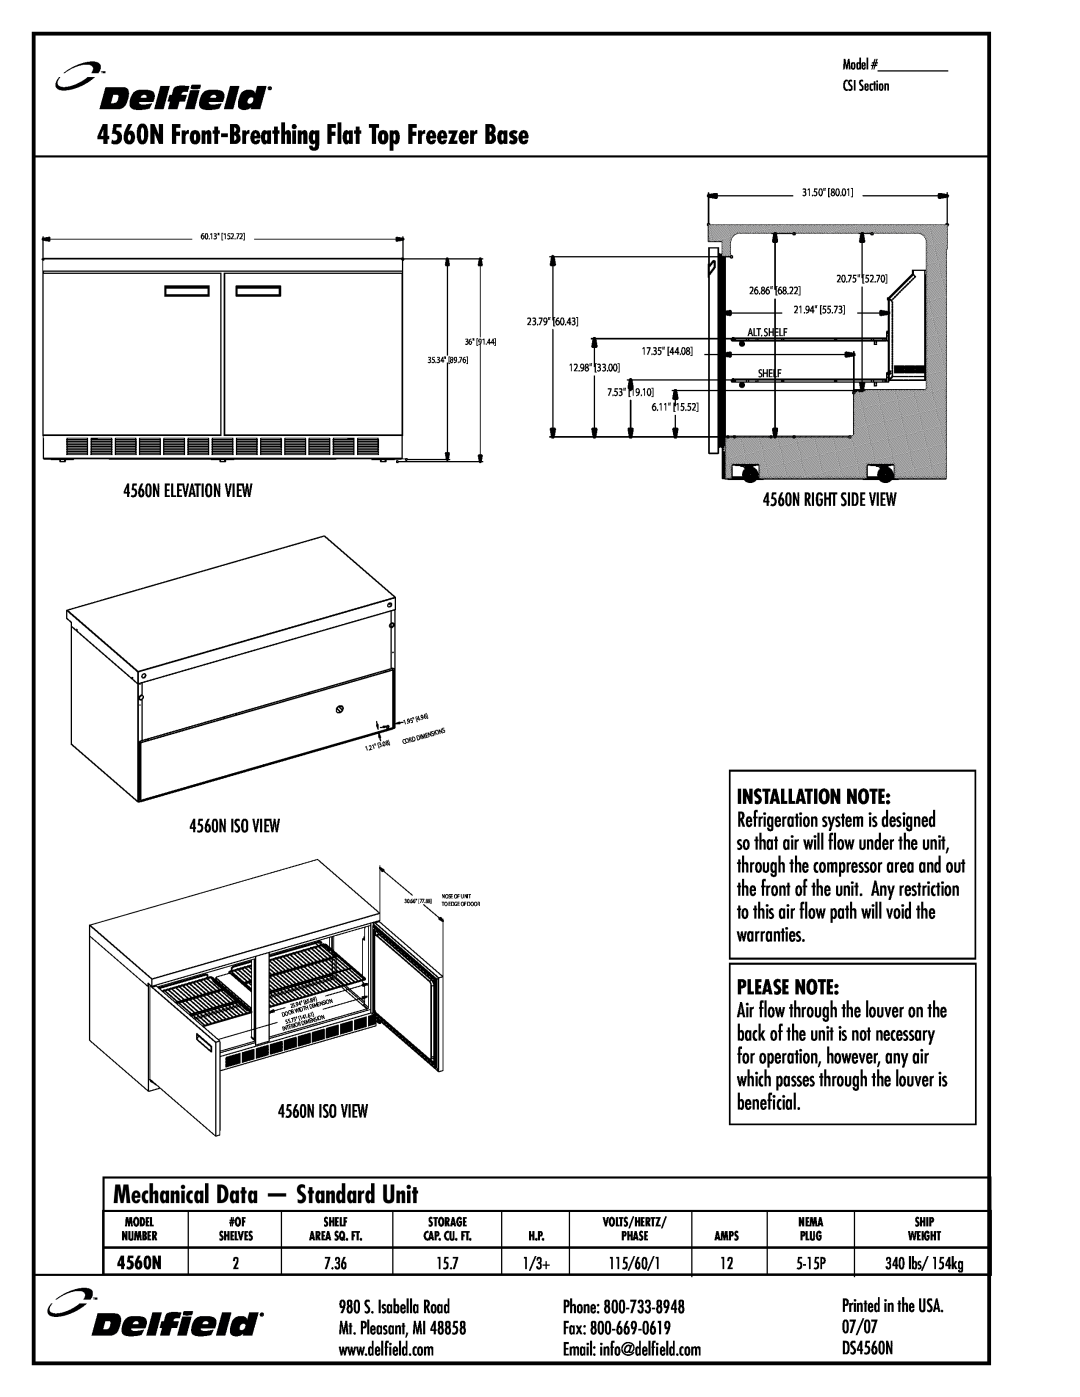 Delfield specifications 4560N Front-BreathingFlat Top Freezer Base, Mechanical Data - Standard Unit, Please Note 